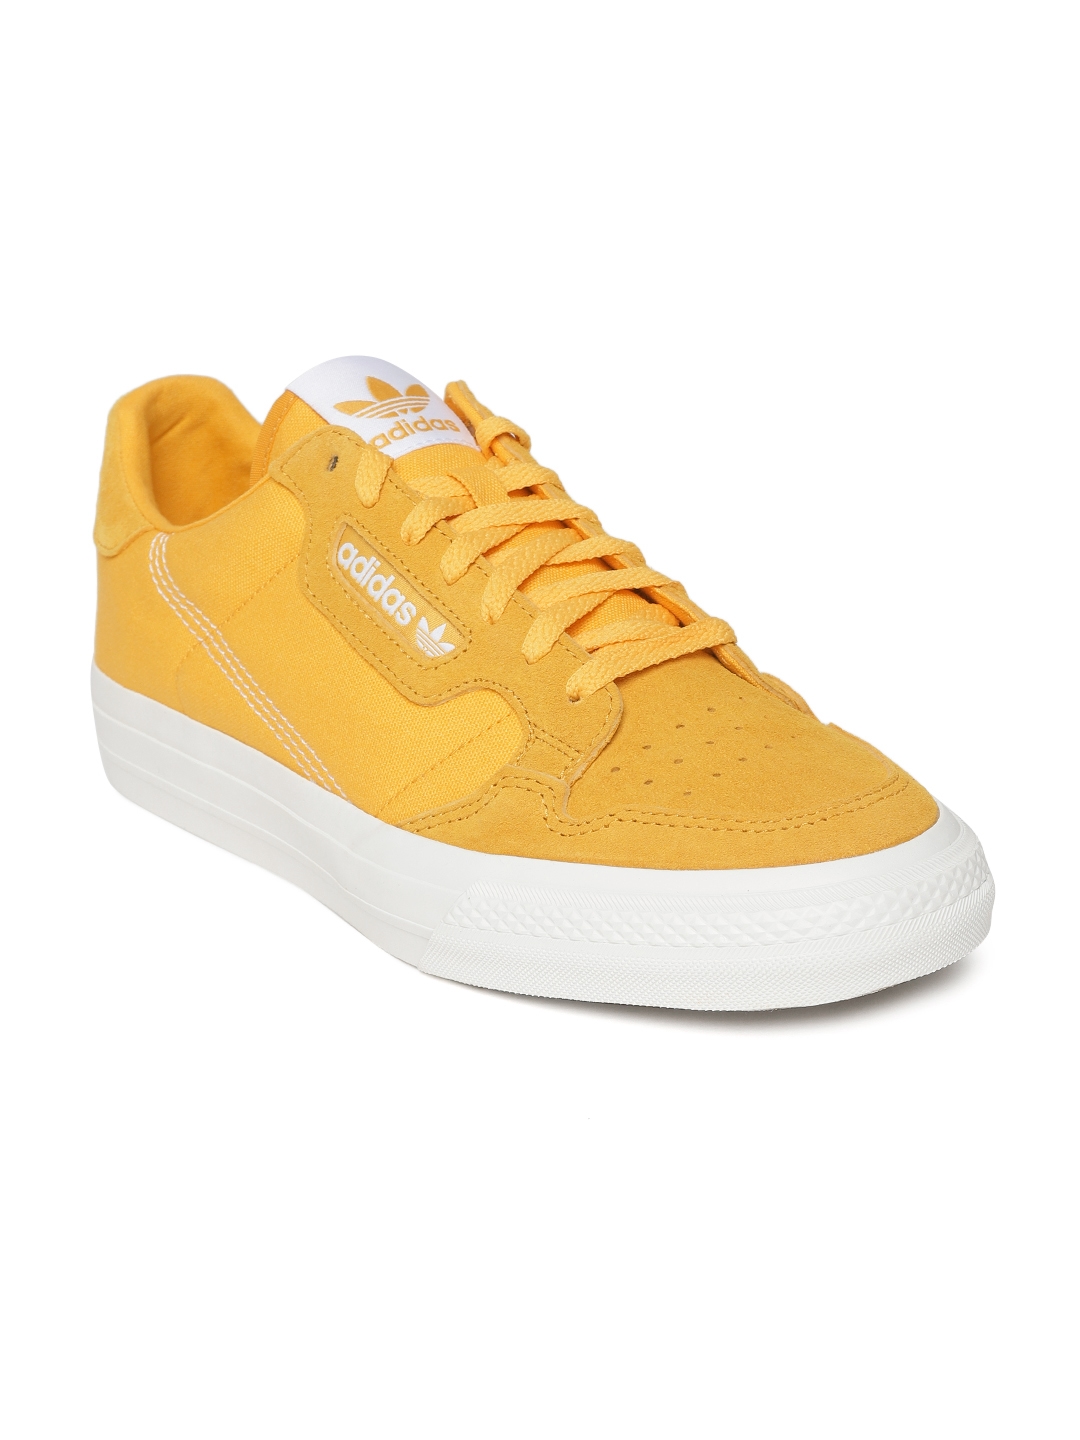 mustard color sneakers